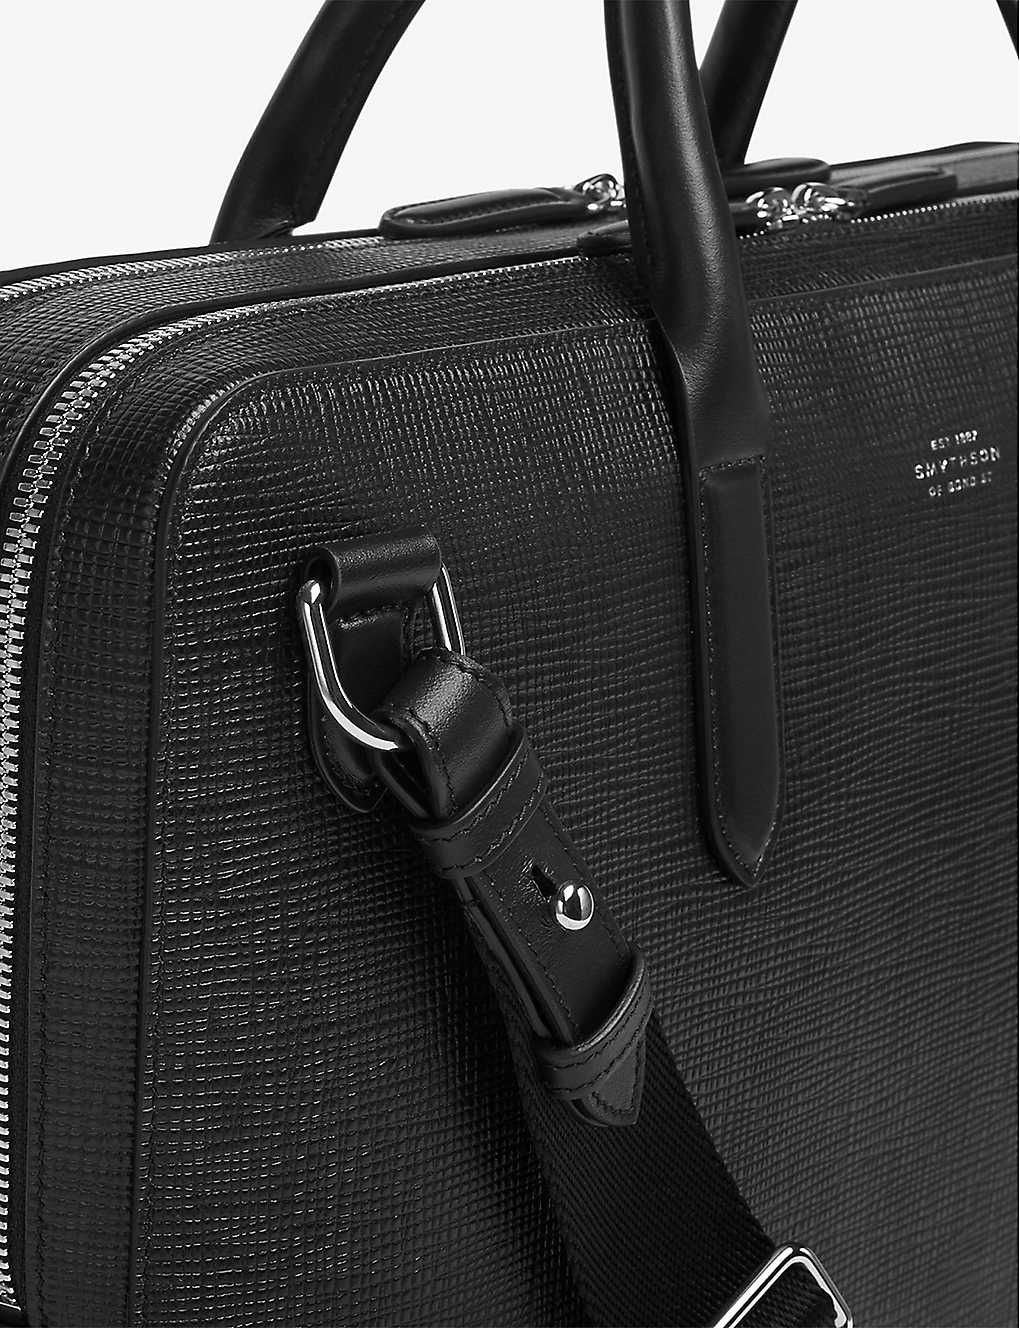 Panama large leather briefcase - 2